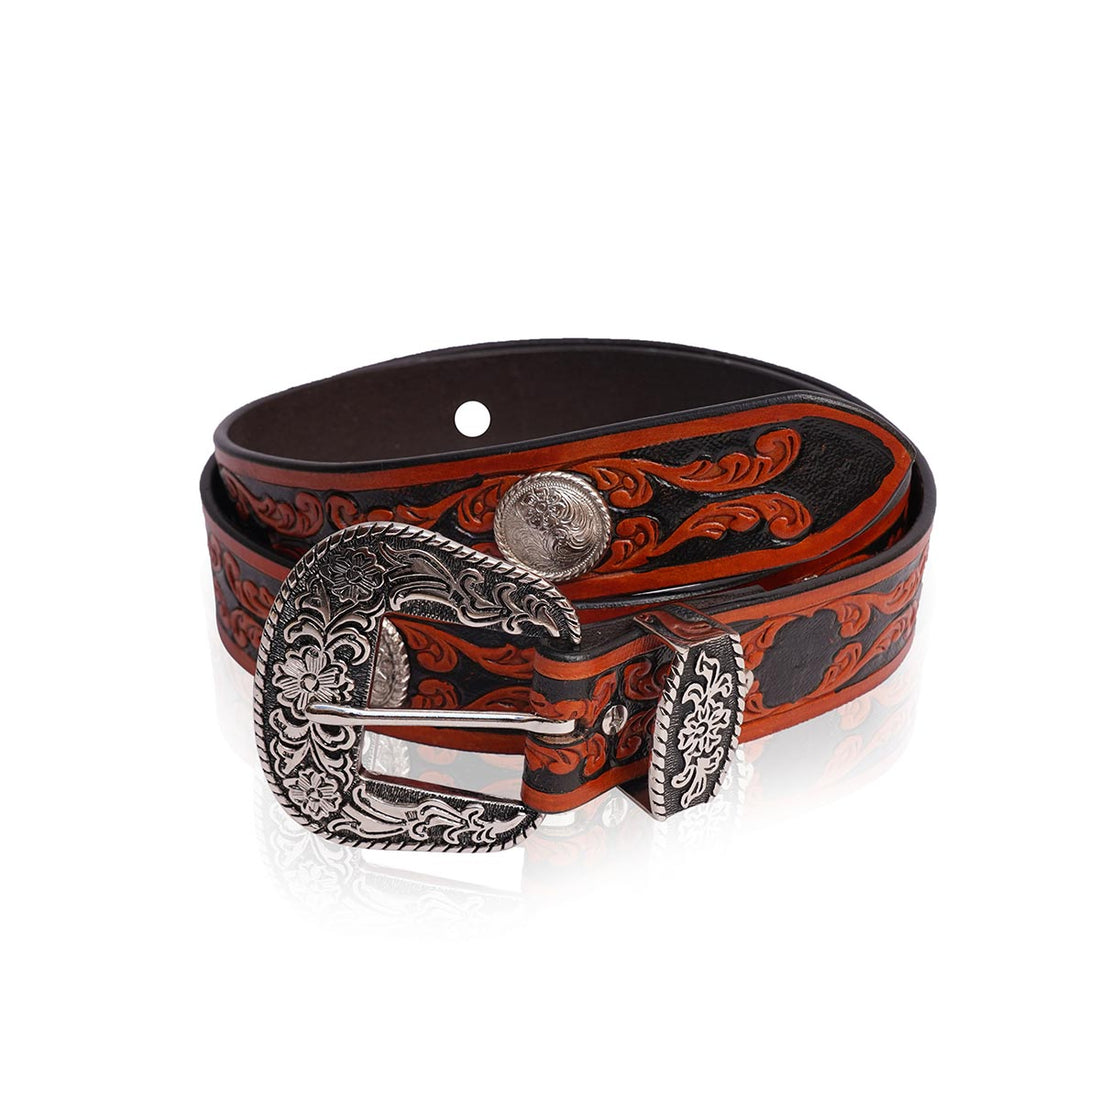 TanTrum- Leather Cowboy Belt